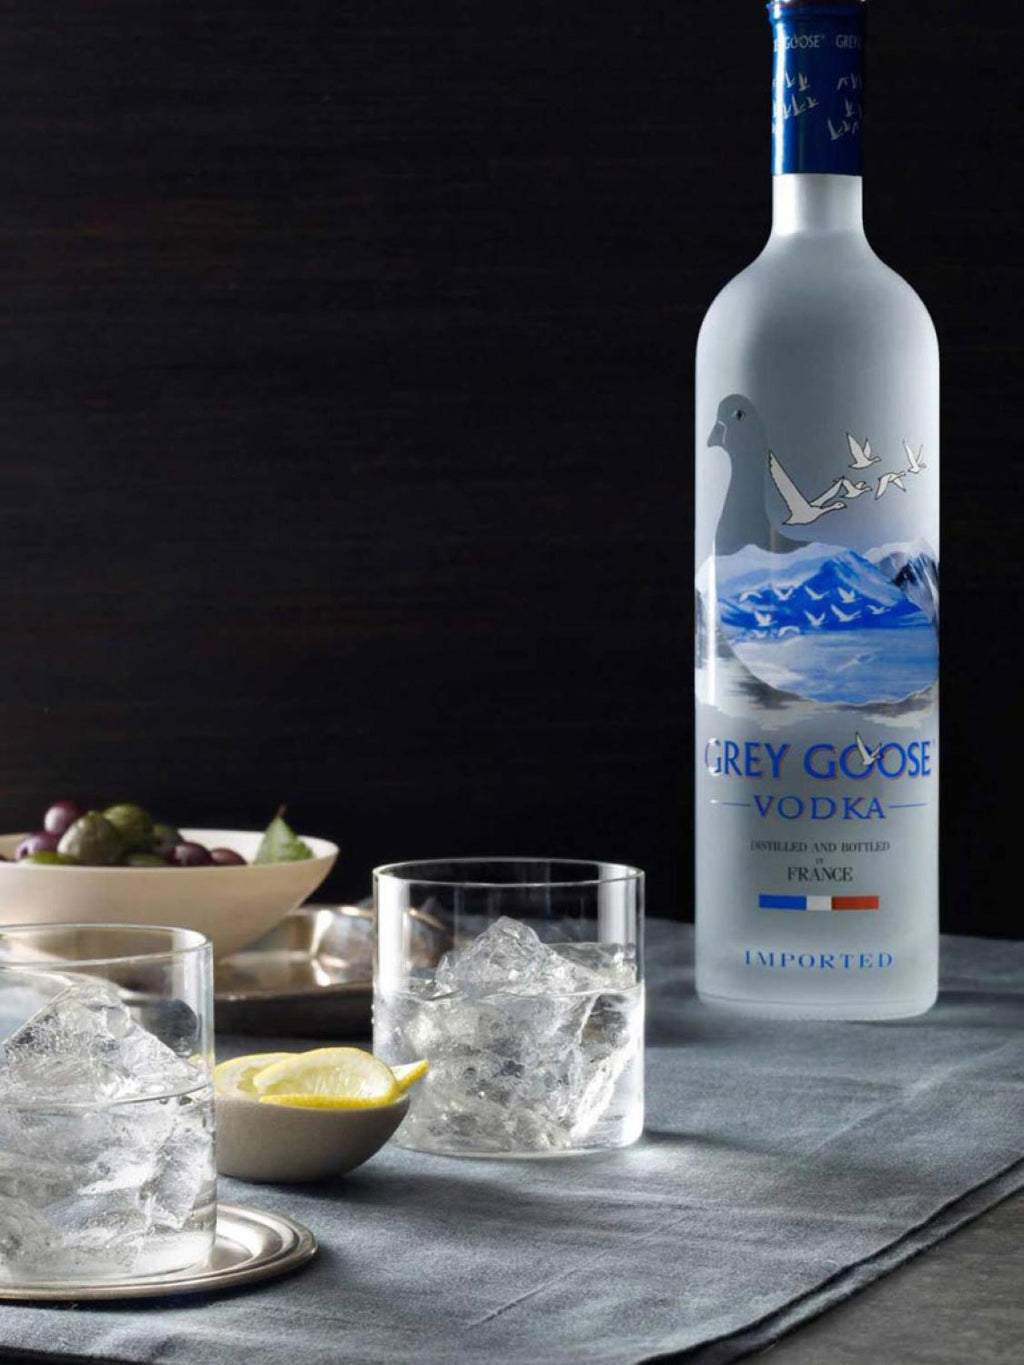 Belvedere Vodka - 3 Litre Bottle